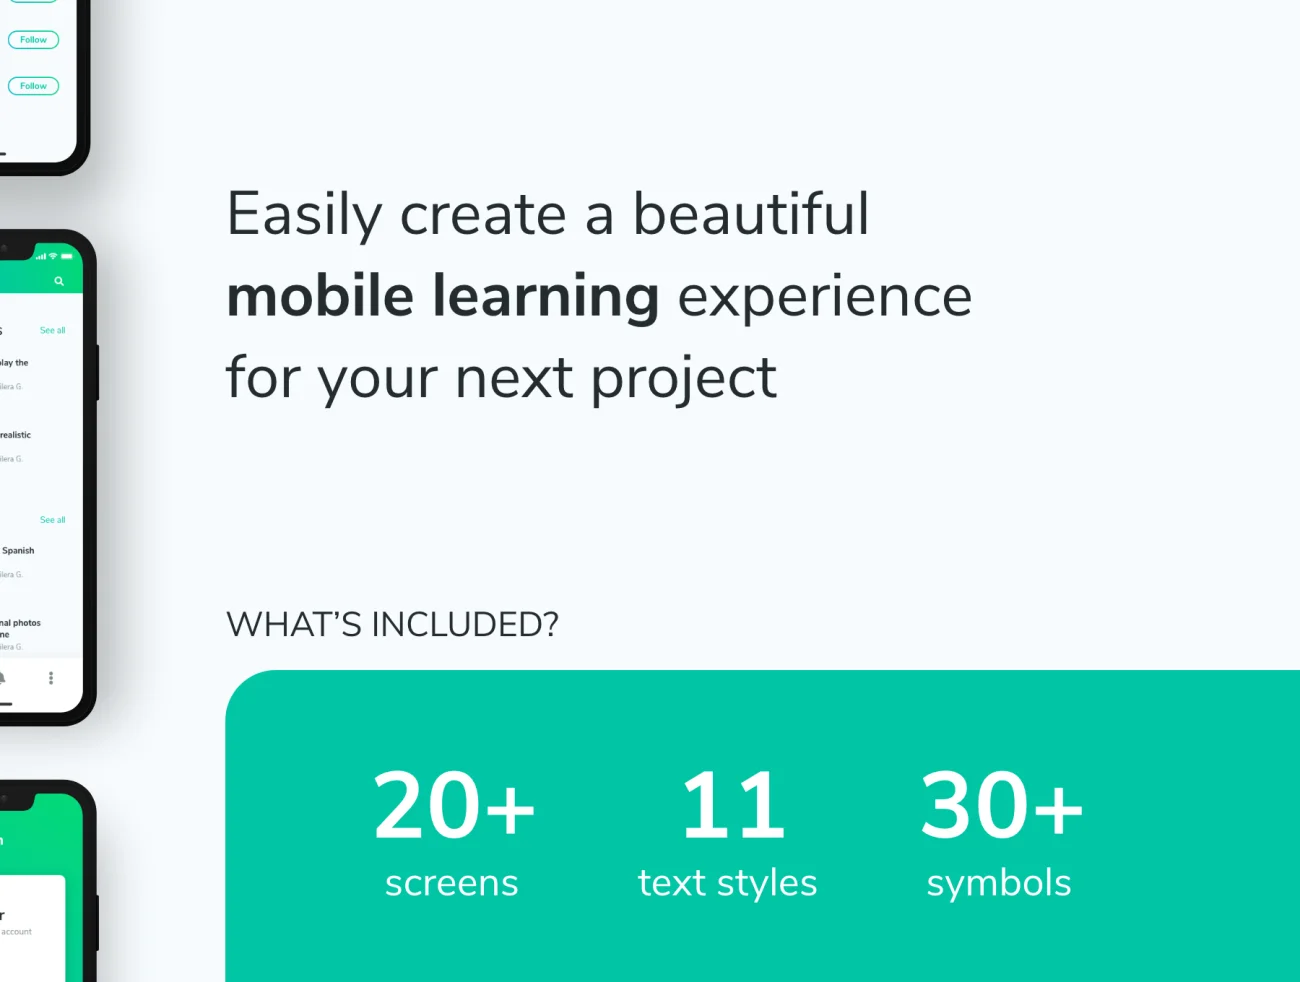 ProLearn - E-learning Mobile UI Kit 在线学习远程教育应用手机端用户界面设计套件-UI/UX-到位啦UI